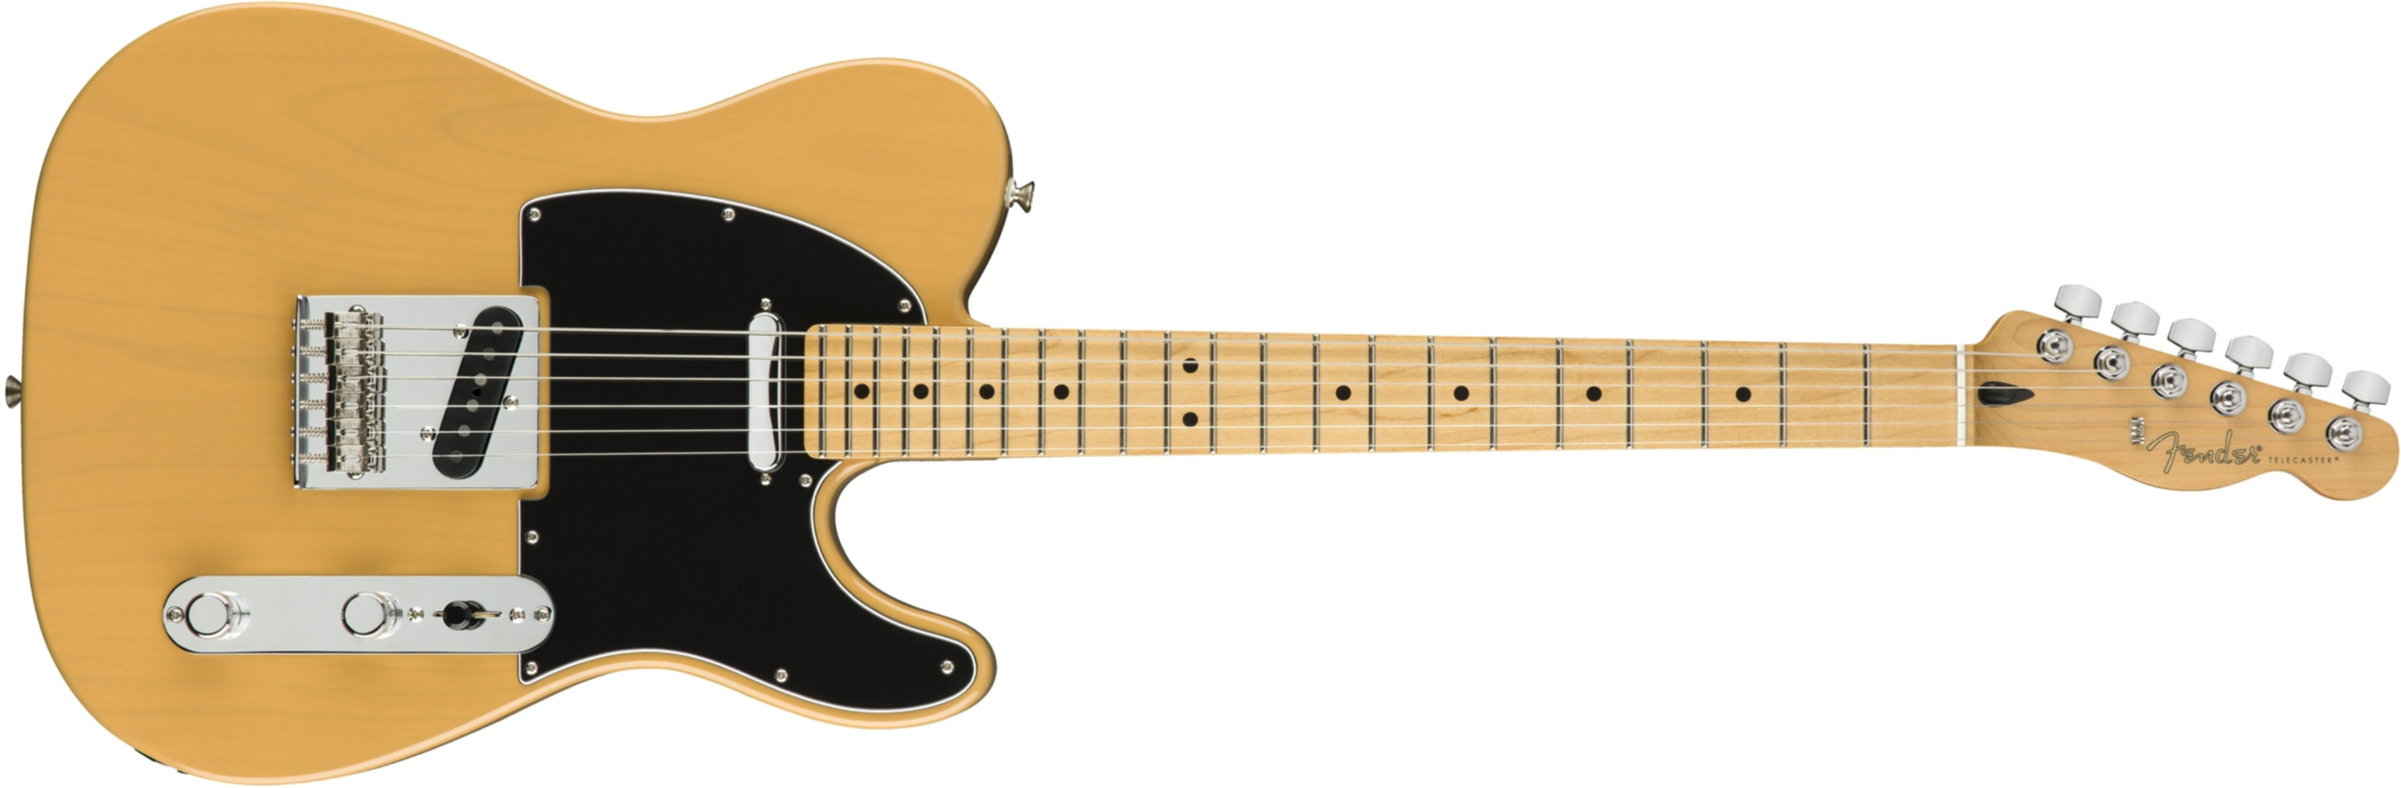 Fender Tele Player Mex Mn - Butterscotch Blonde - Tel shape electric guitar - Main picture